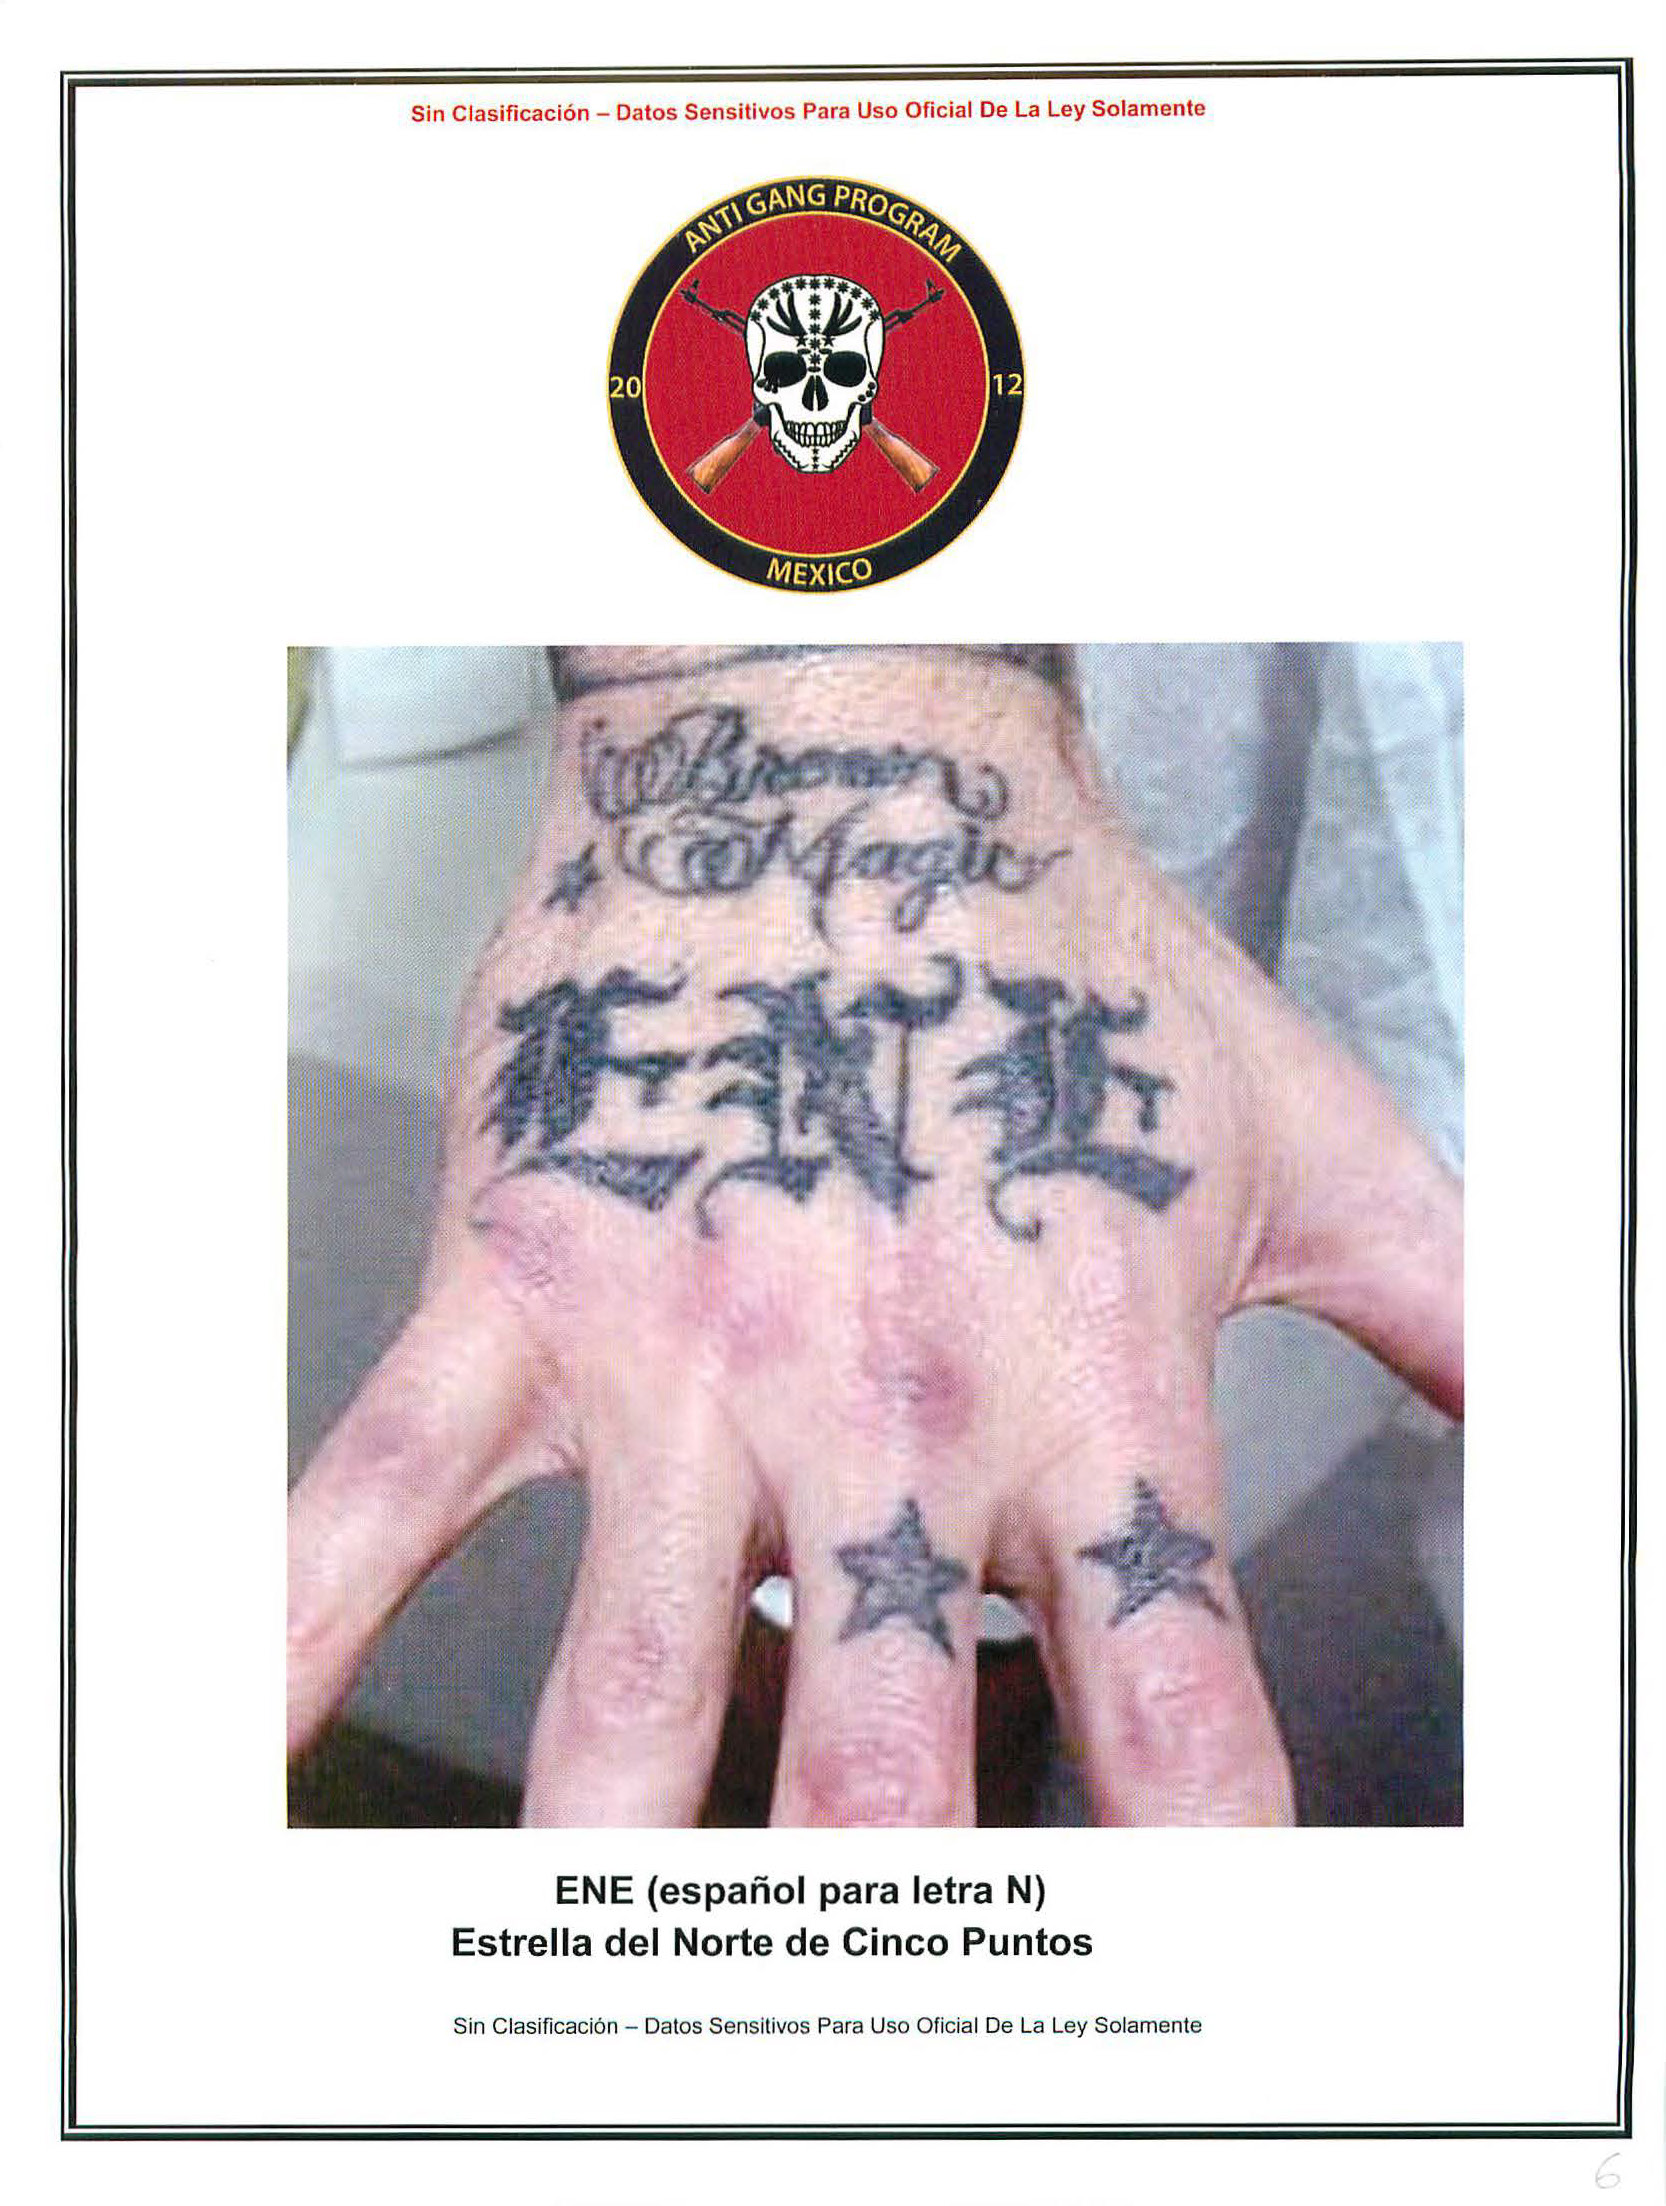 Mexico Anti-Gang Program Latino Gang Tattoos Guide | Public Intelligence